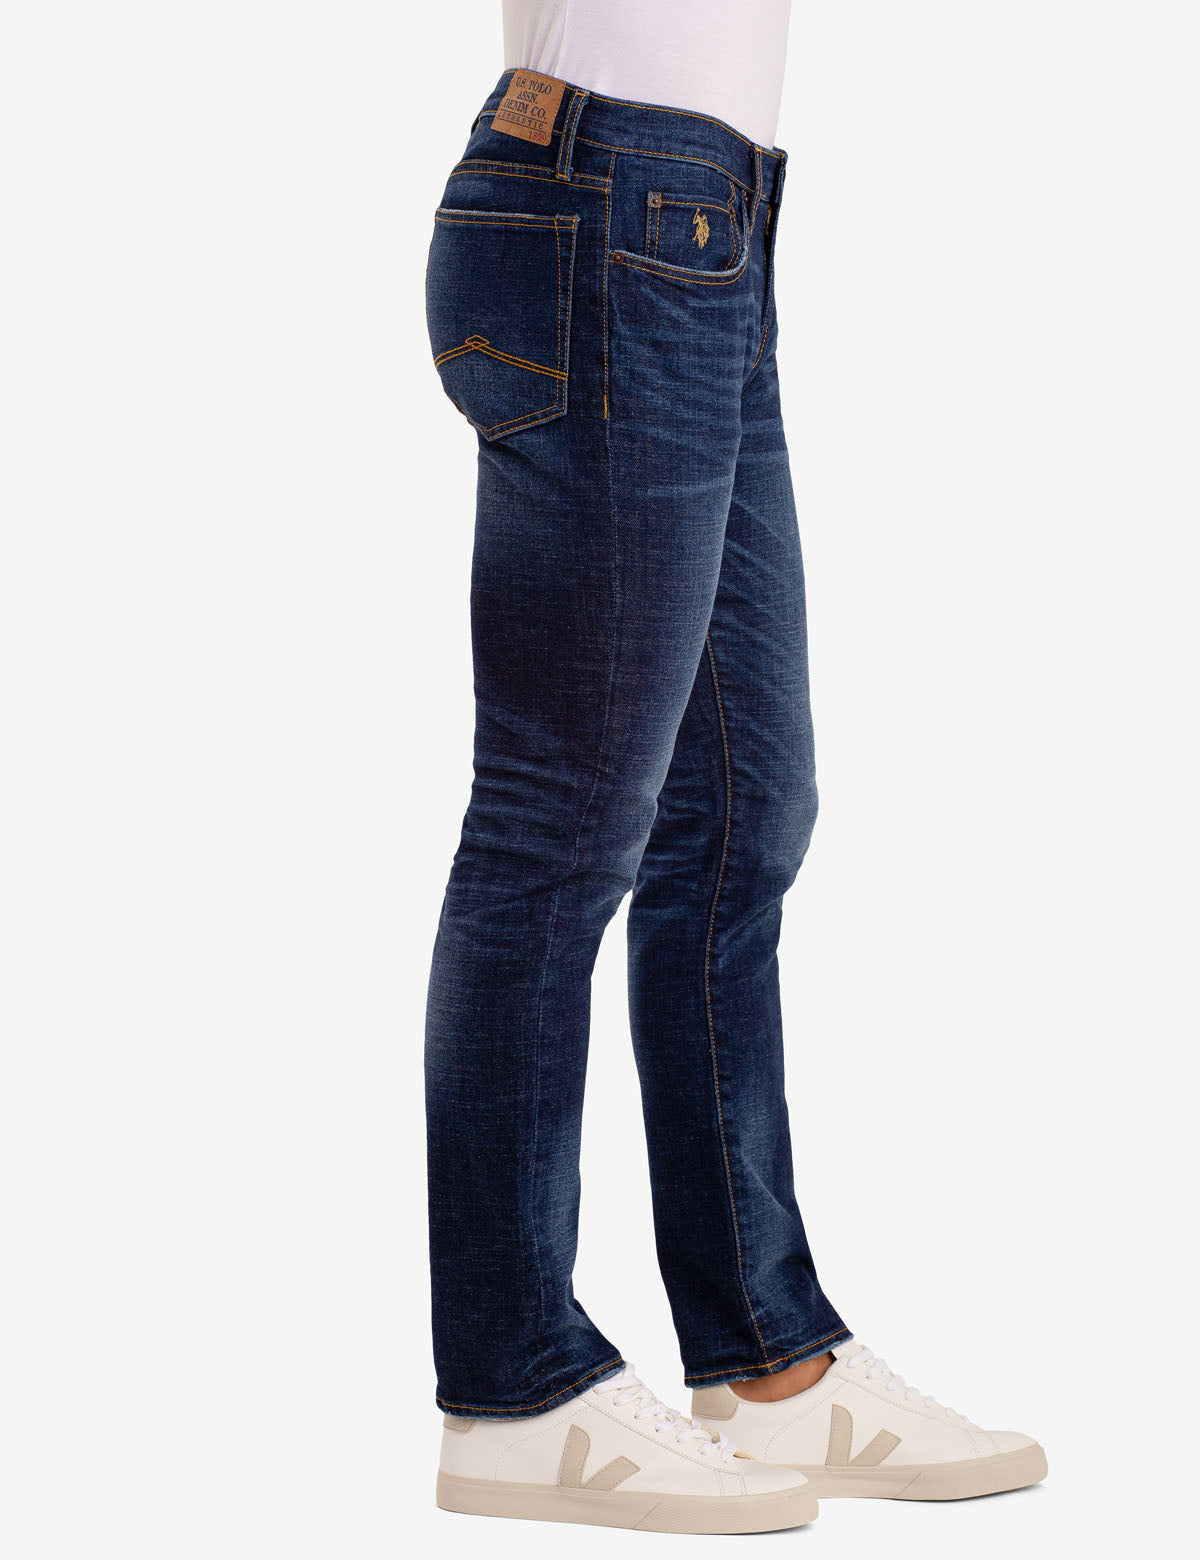 dsquared mens skinny jeans